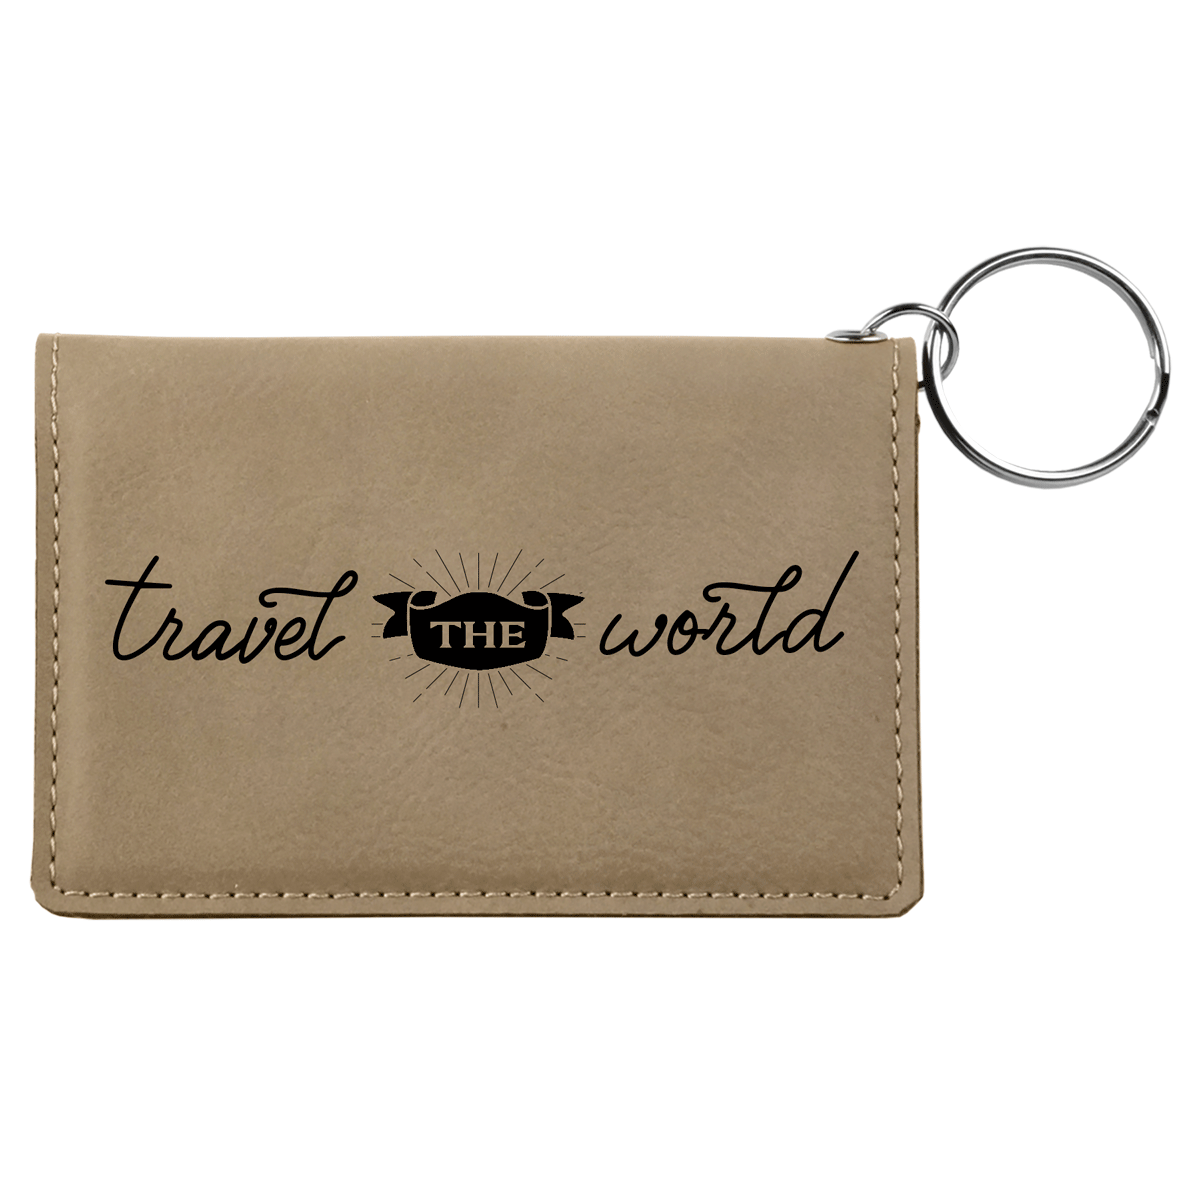 Travel The World - Leatherette Keychain ID Holder